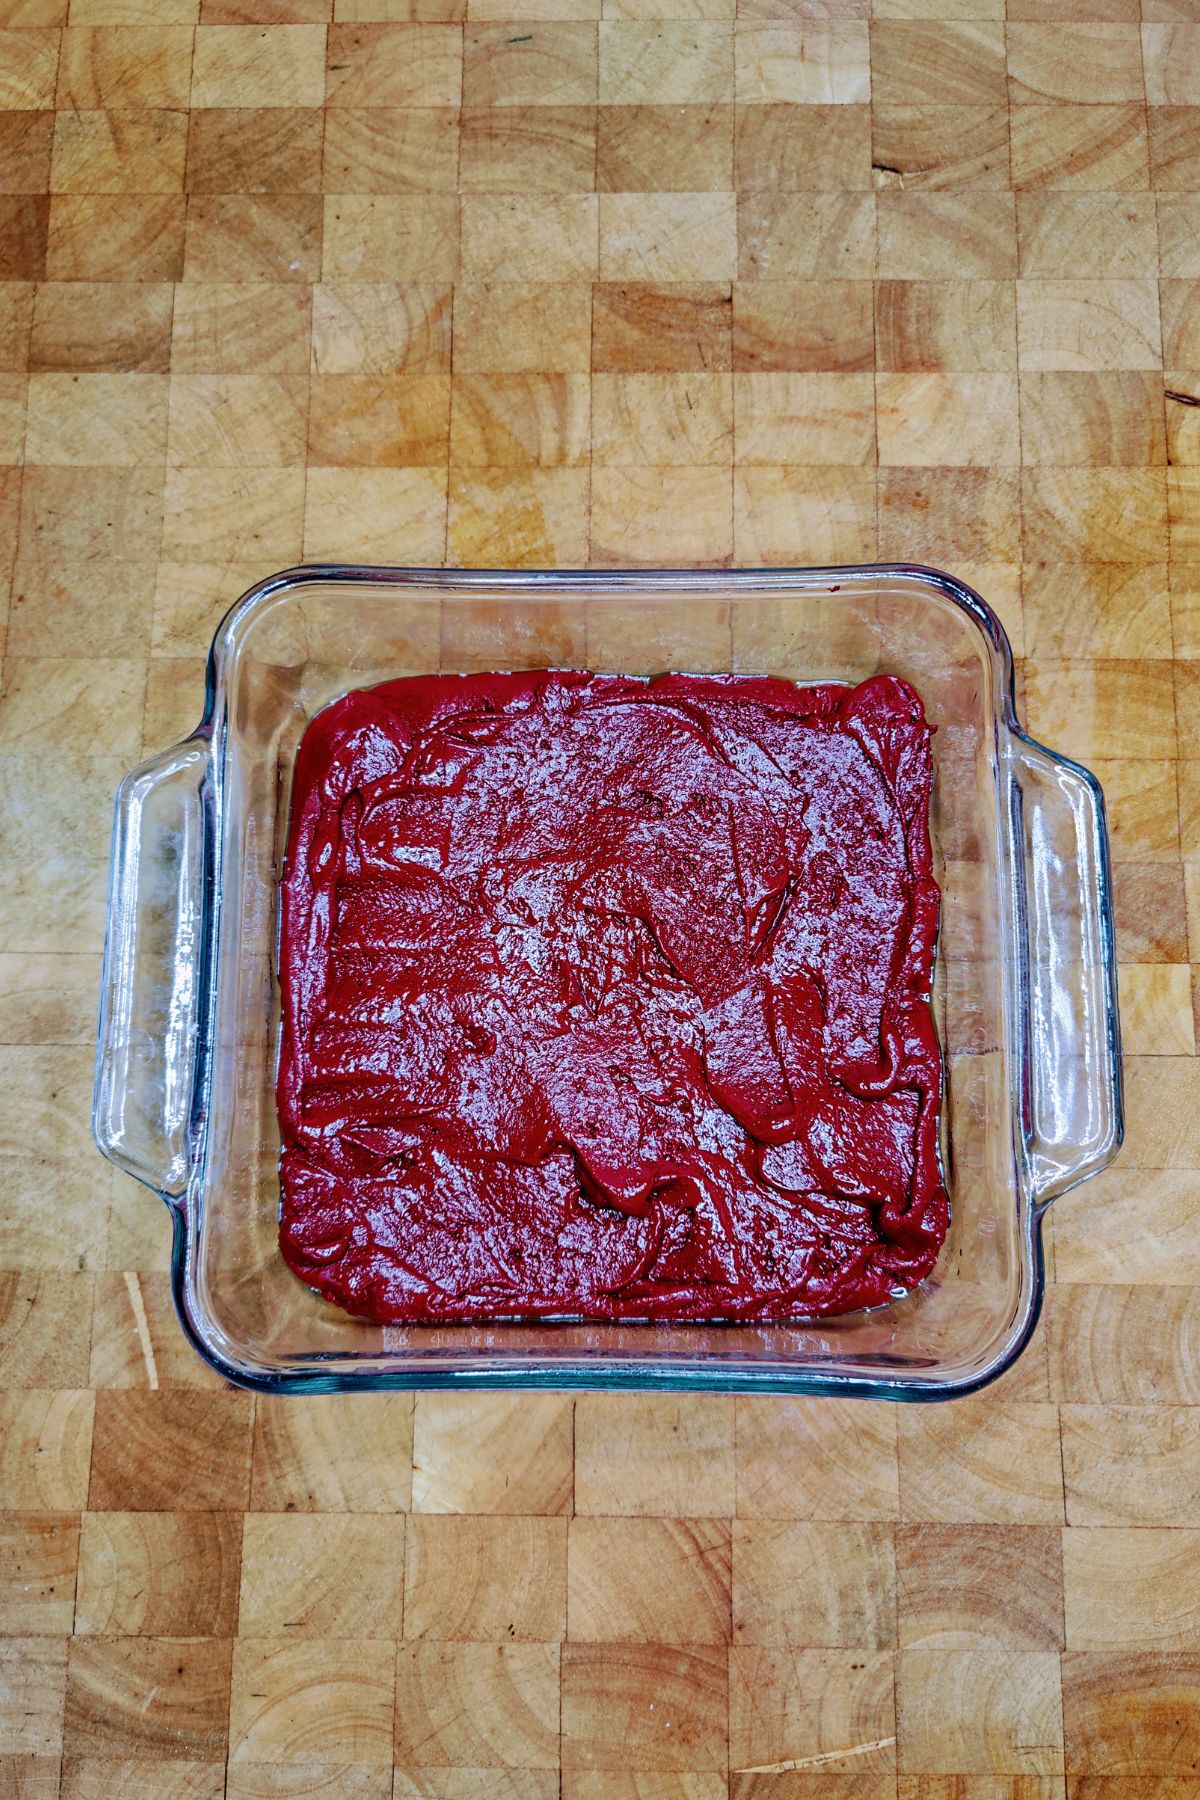 Red velvet cake mix brownie batter in a baking pan.